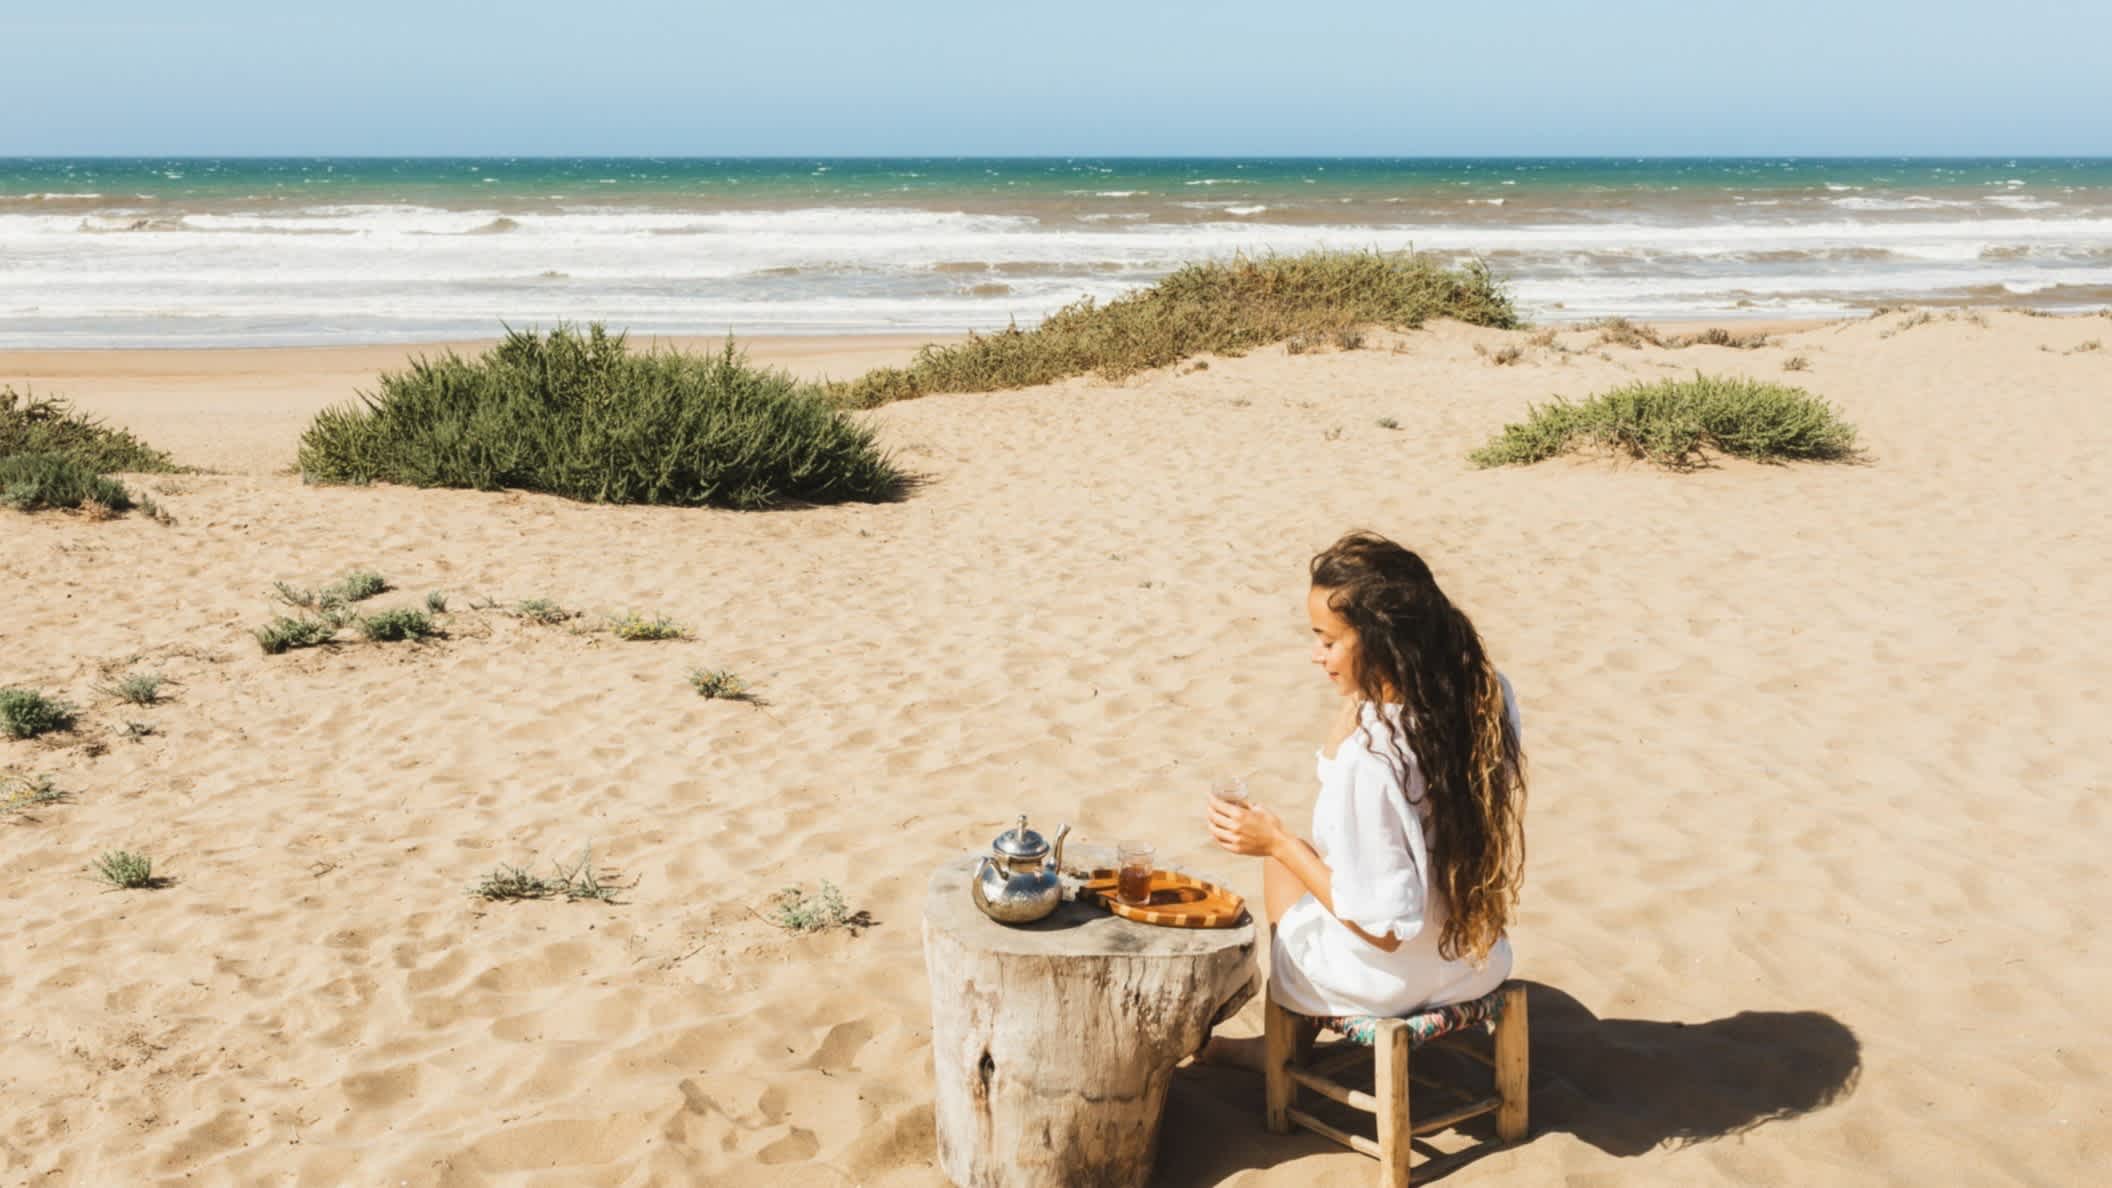 Frau genießt marokkanischen Tee am Sandstrand des Kaf Lahmam, Tanger-Tétouan-Al Hoceïma, in Marokko bei sonnigem Wetter.

